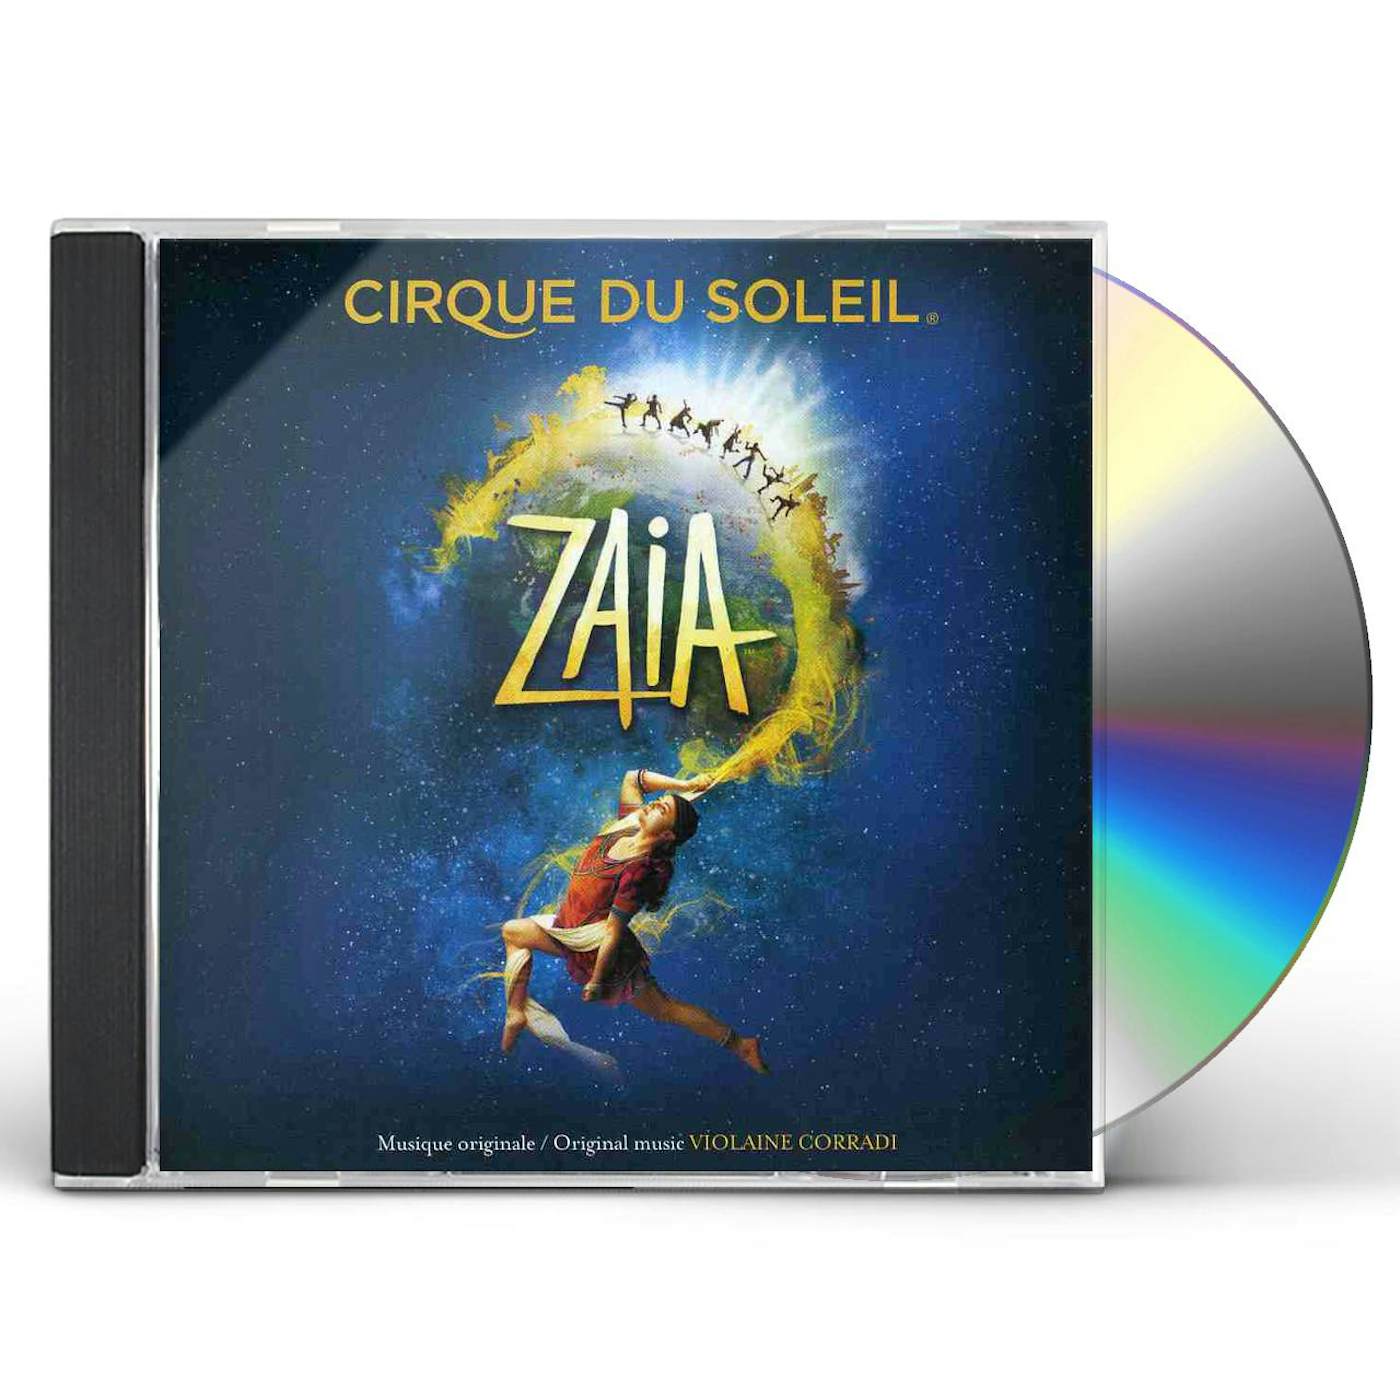 Cirque du Soleil ZAIA CD